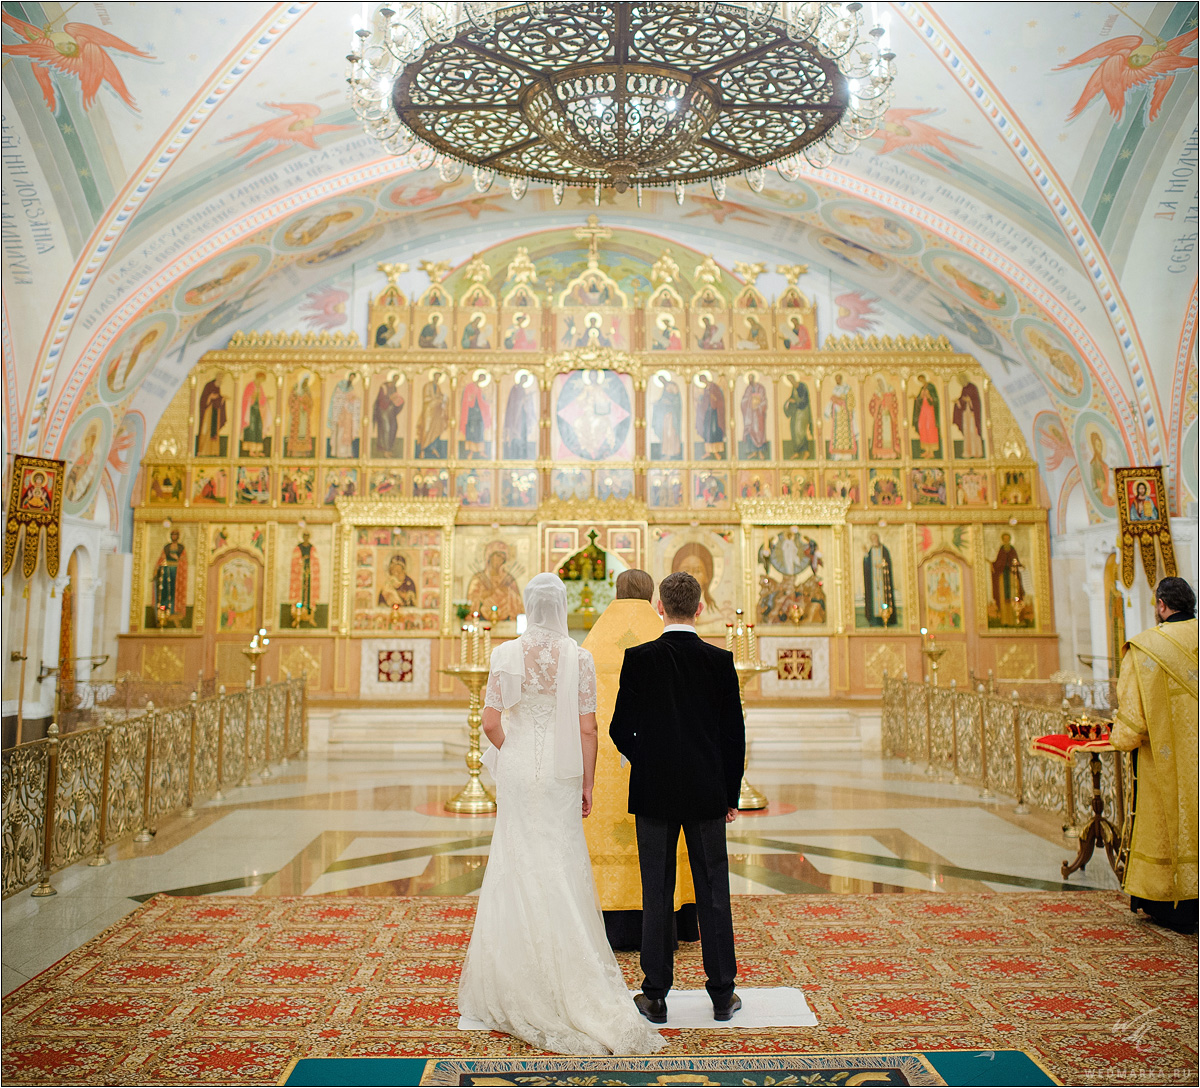 центр искусств храма христа спасителя регистрация брака